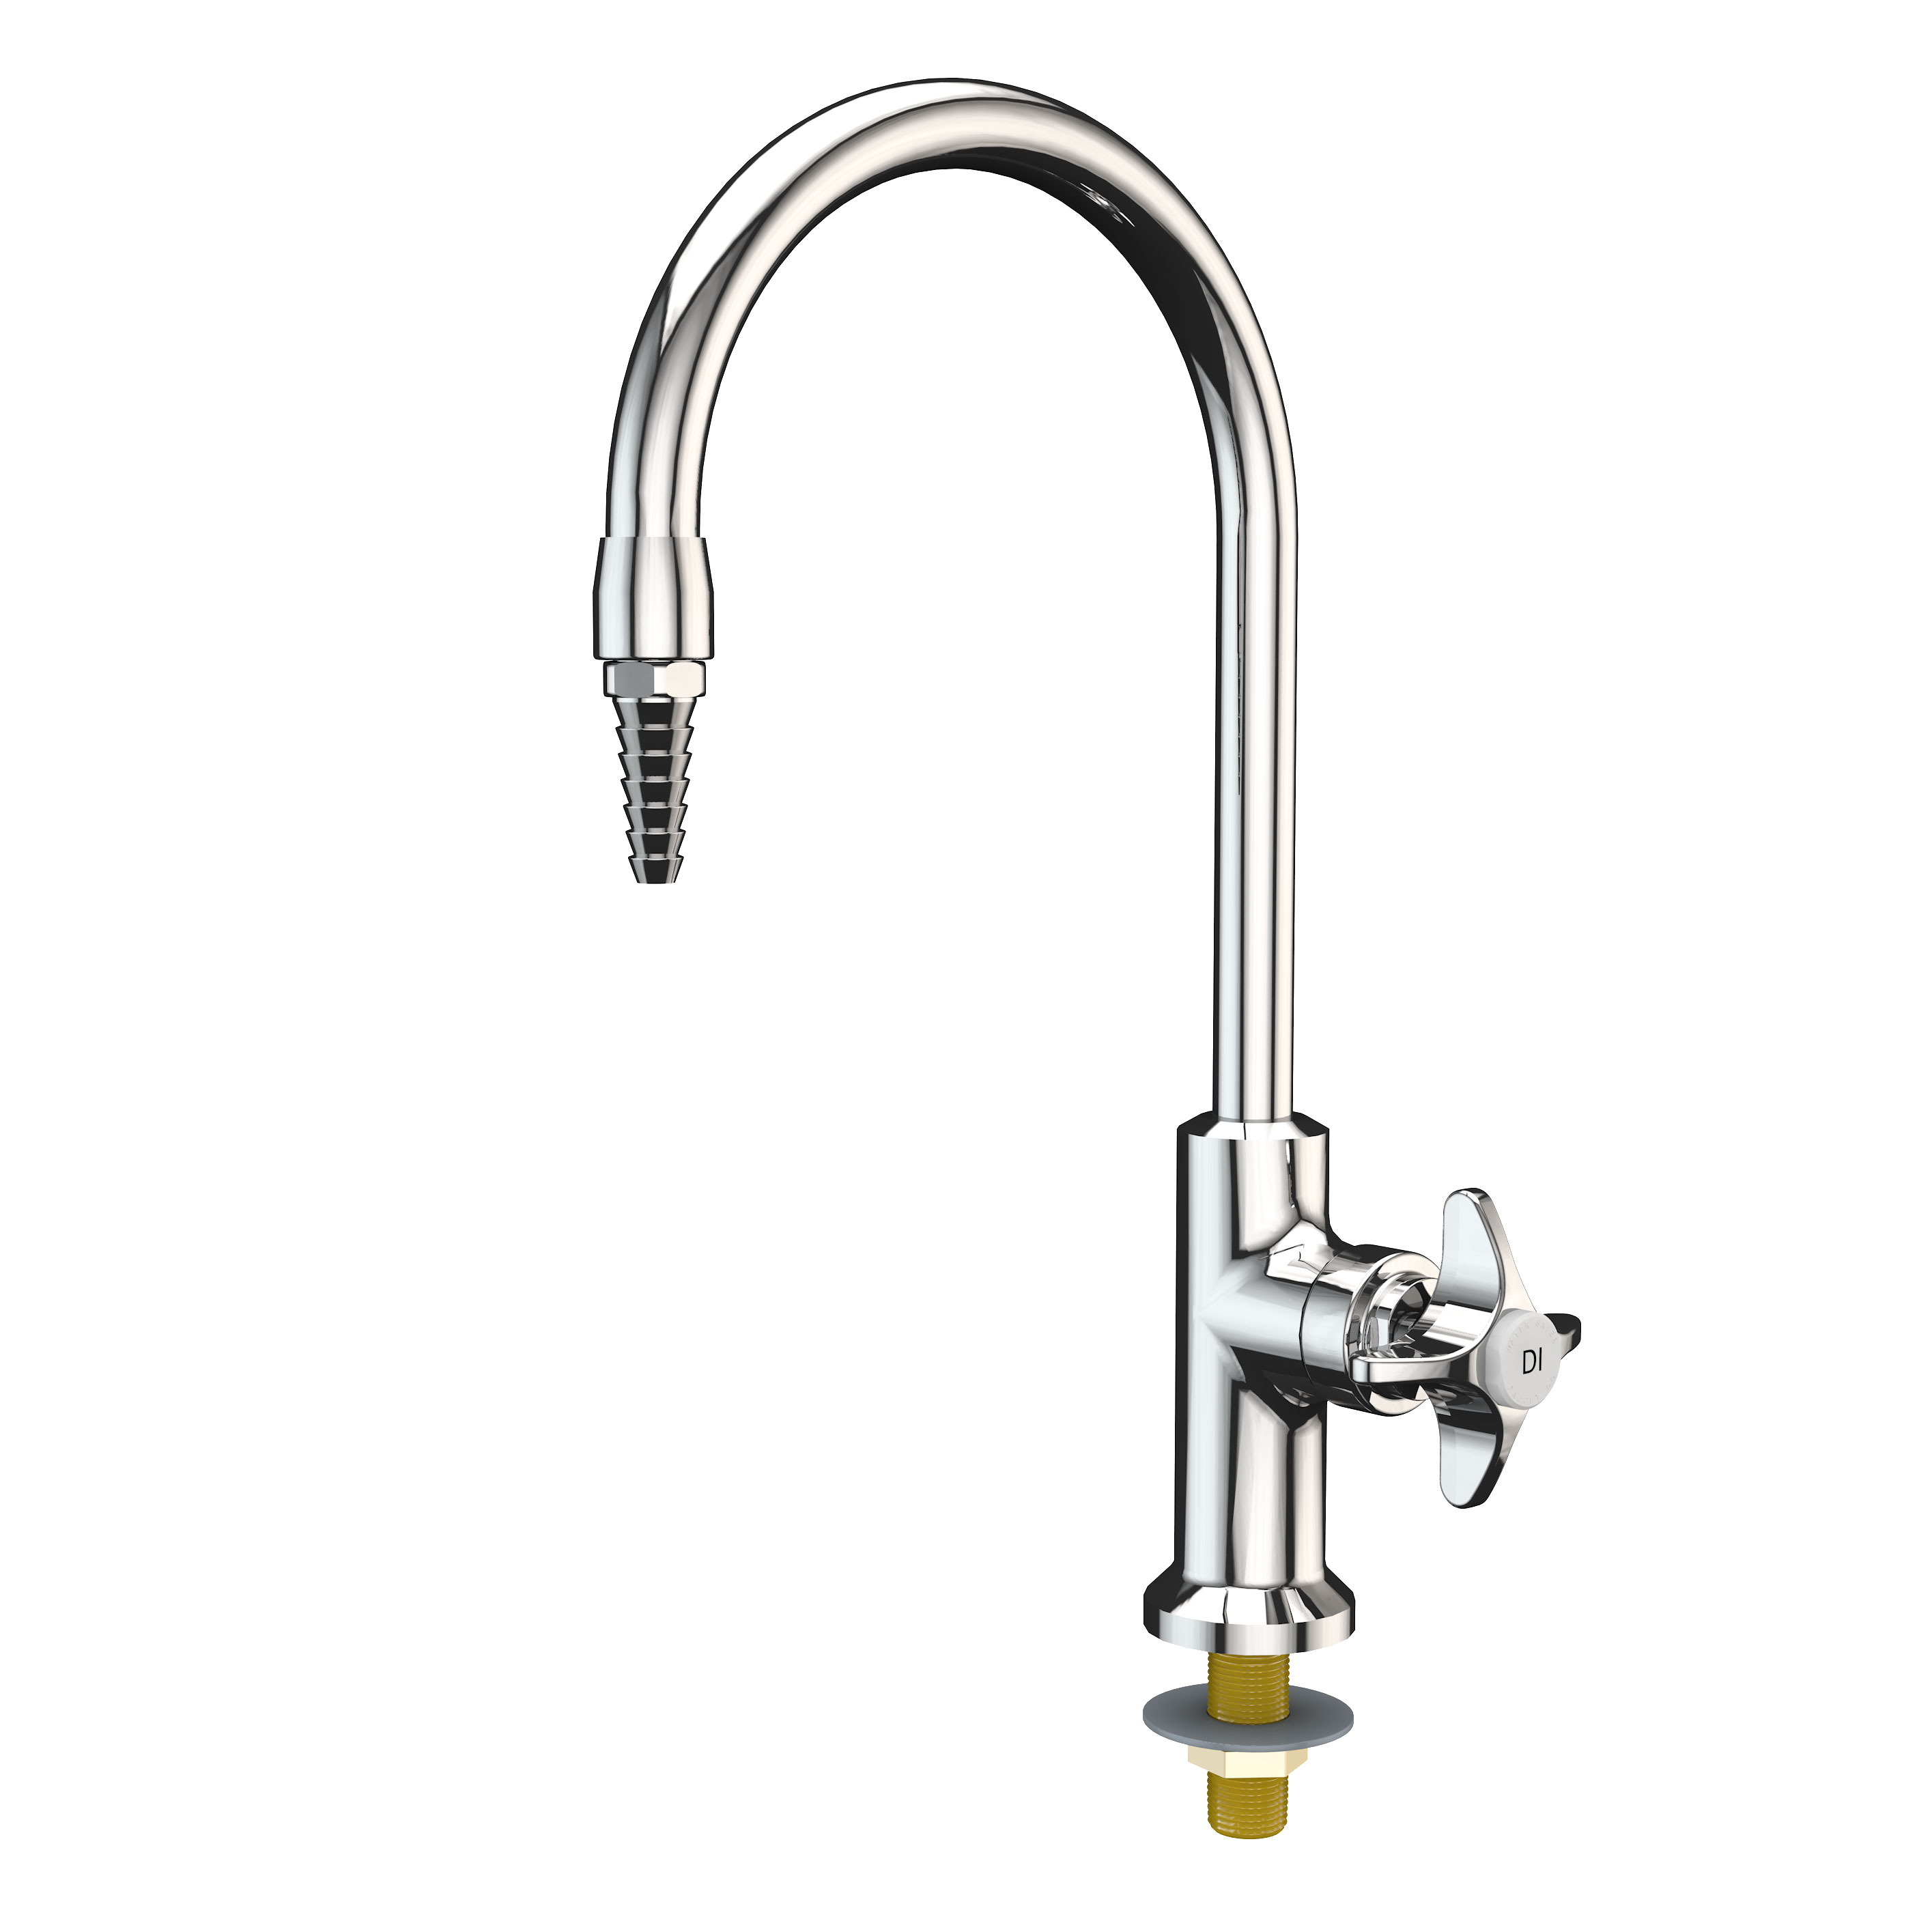 L691 Watersaver Faucet Co